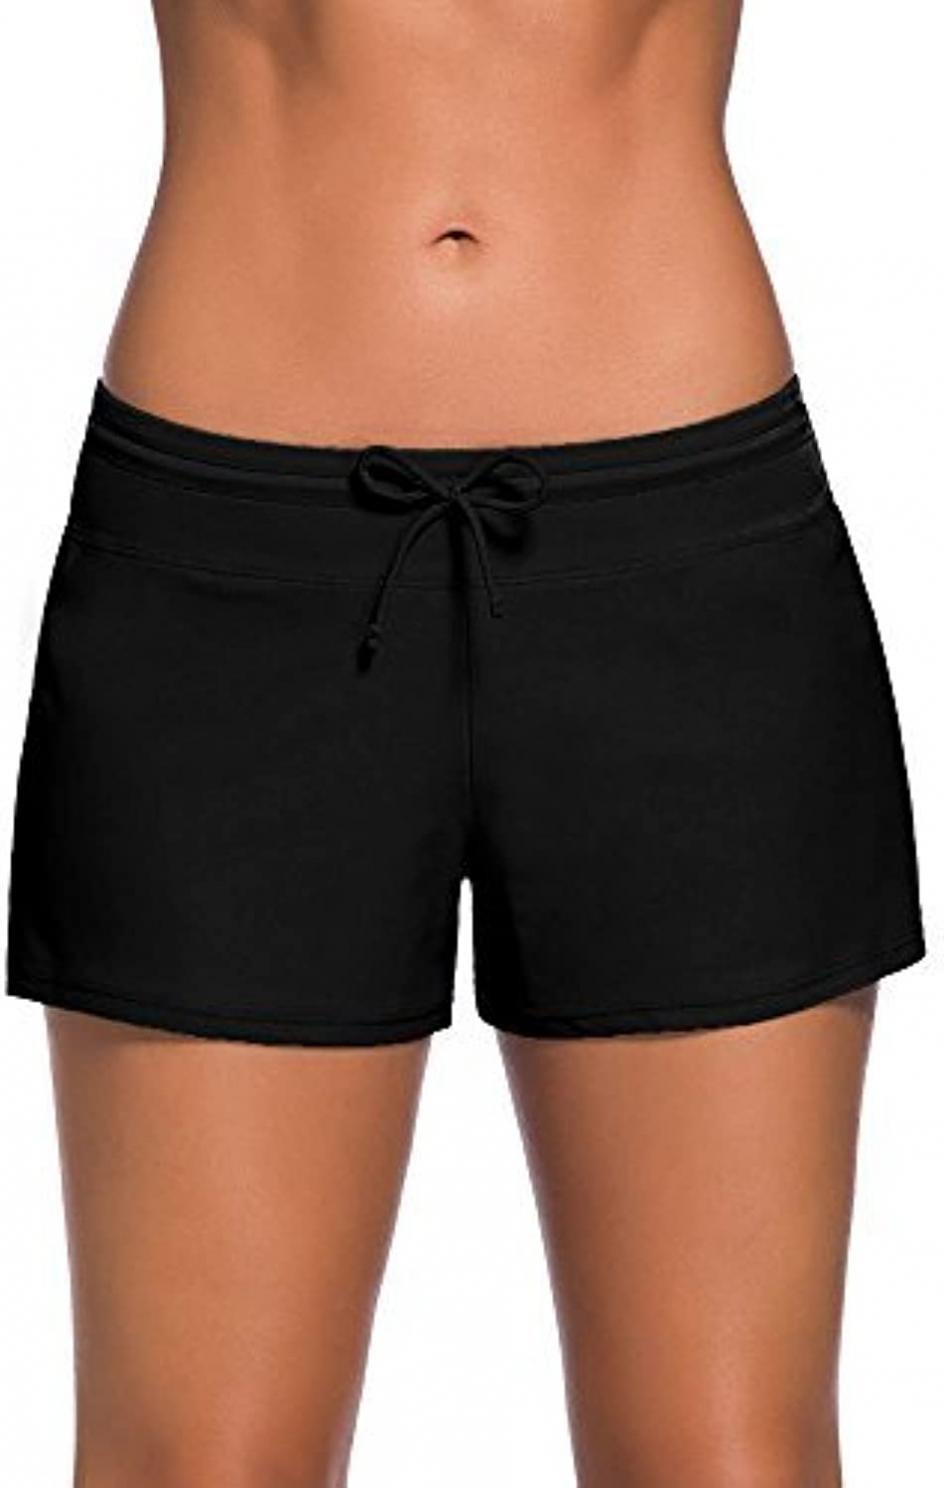 WILLBOND Women Swimsuit Shorts Tankini Swim Briefs Plus Size Bottom Boardshort Summer Swimwear Beach Trunks for Girls